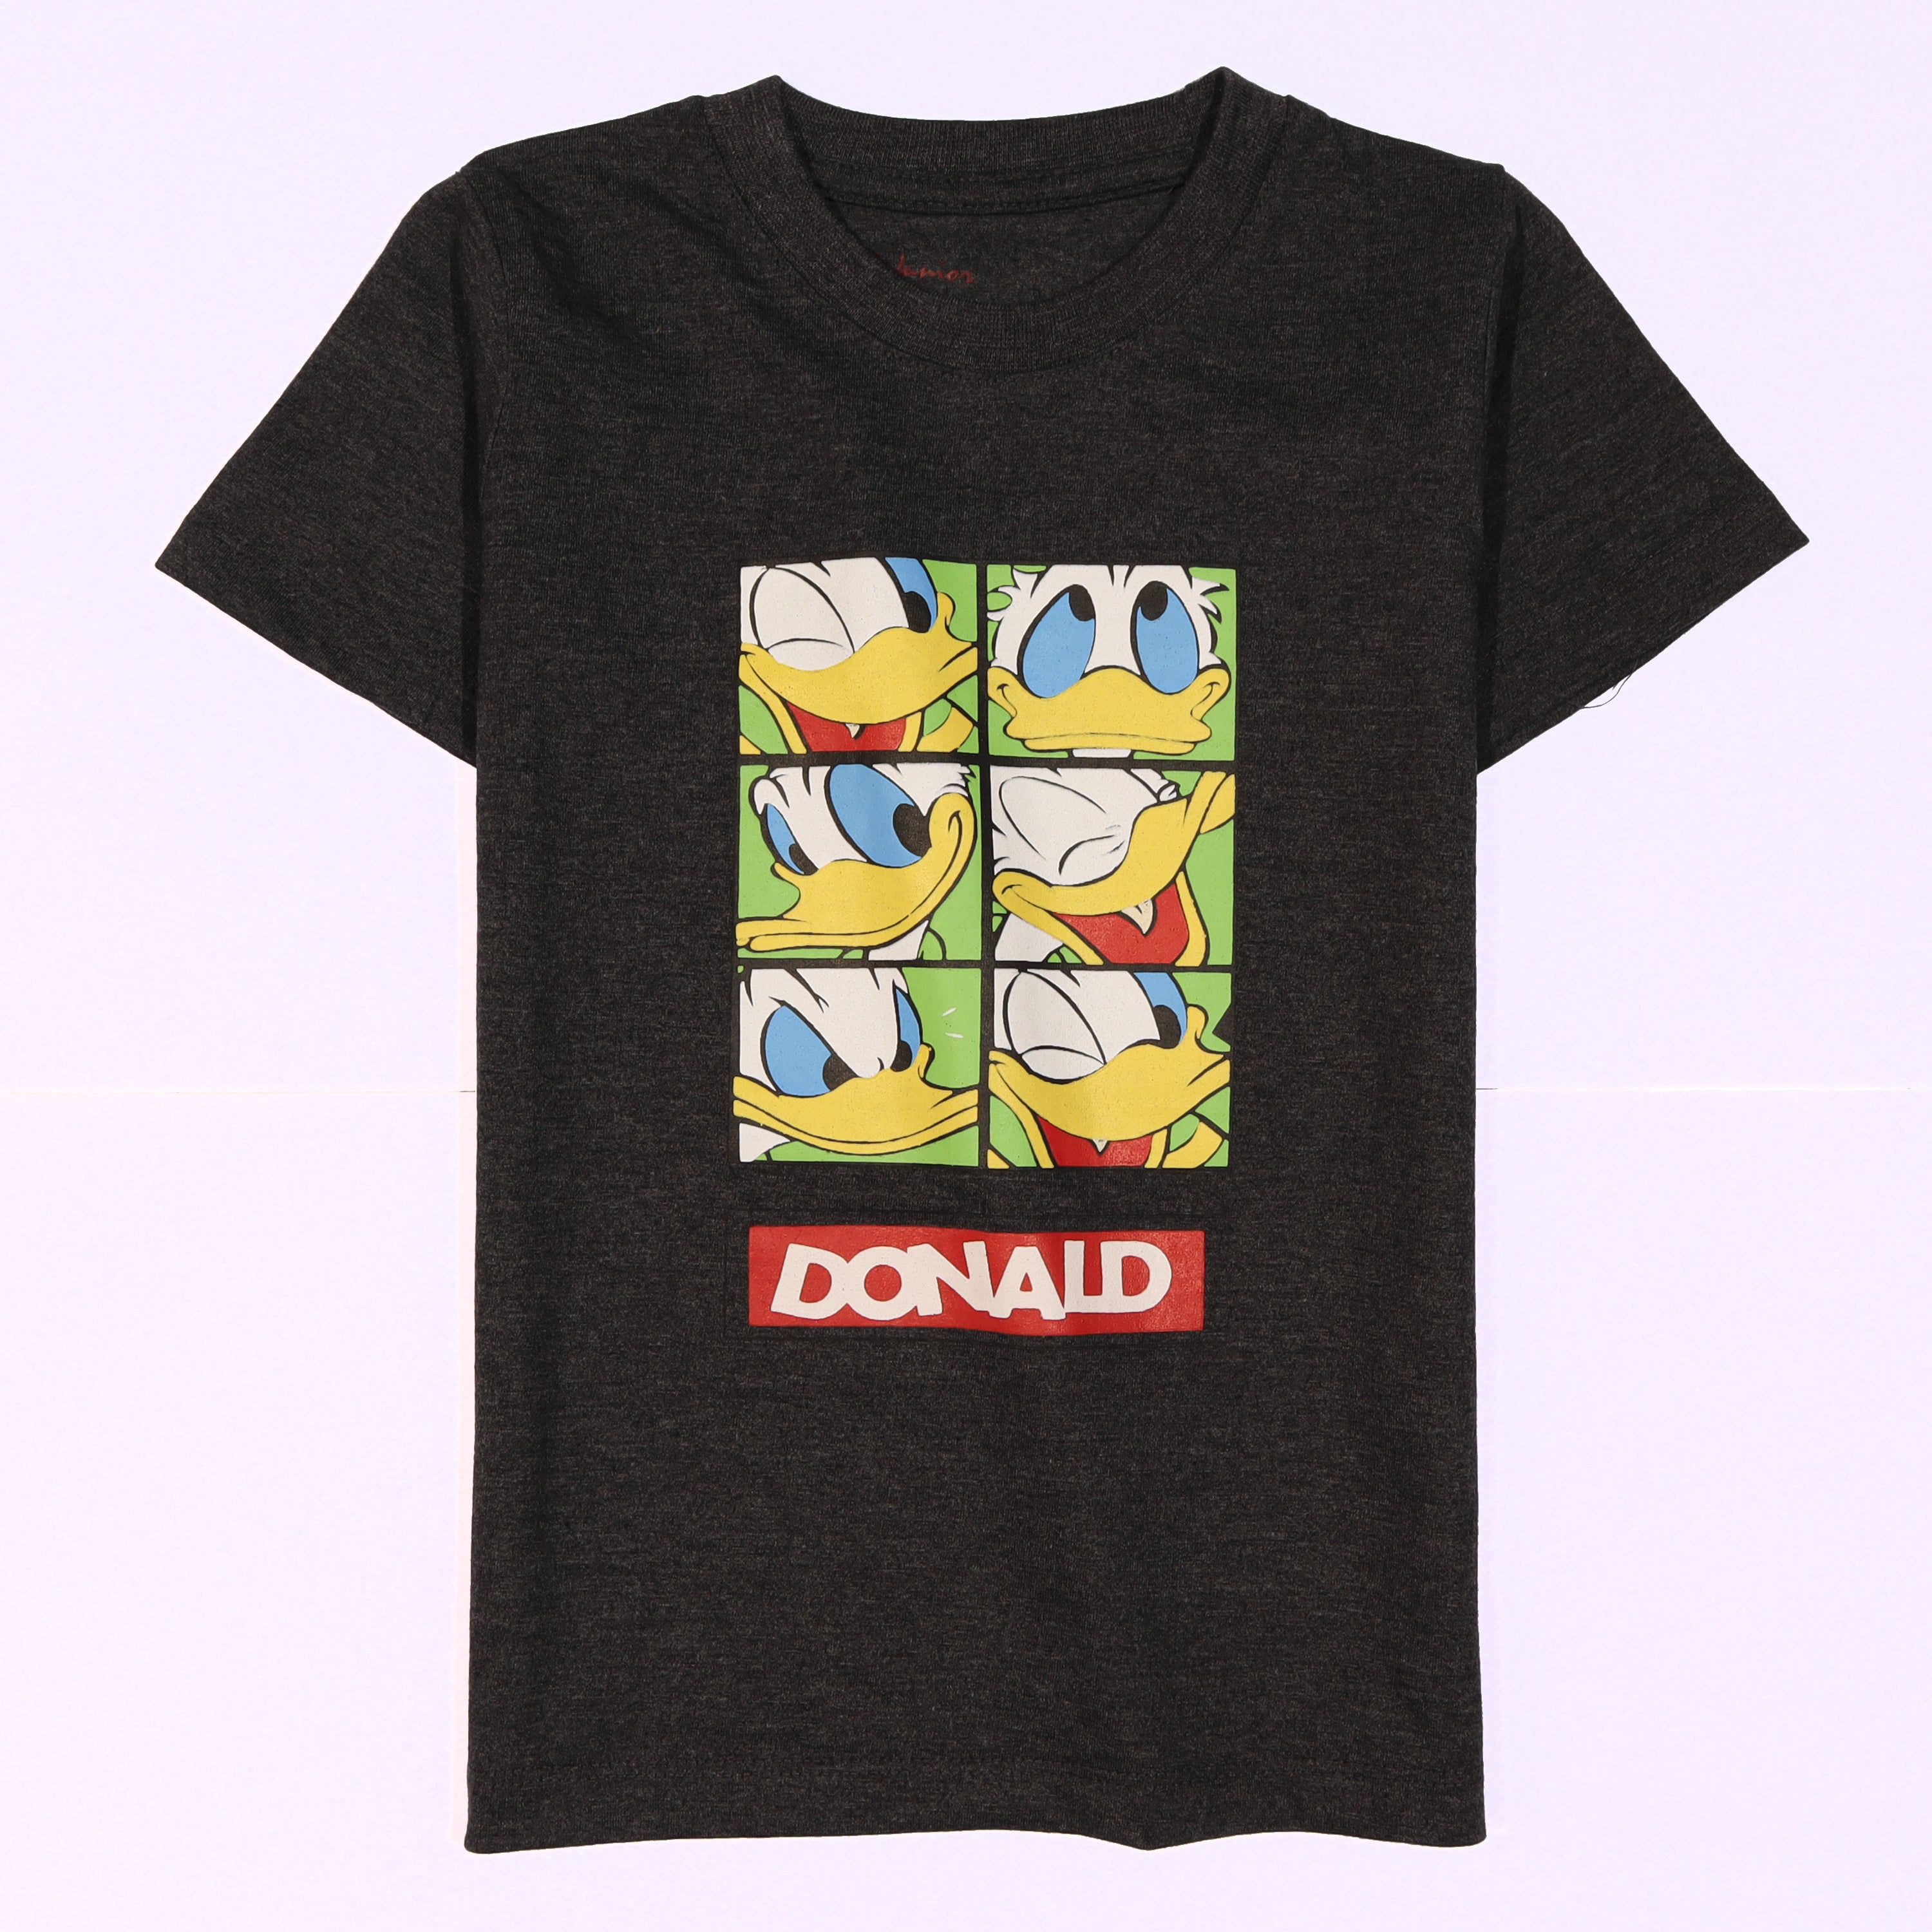 Boys Half Sleeves-Printed T-Shirt (Donald)